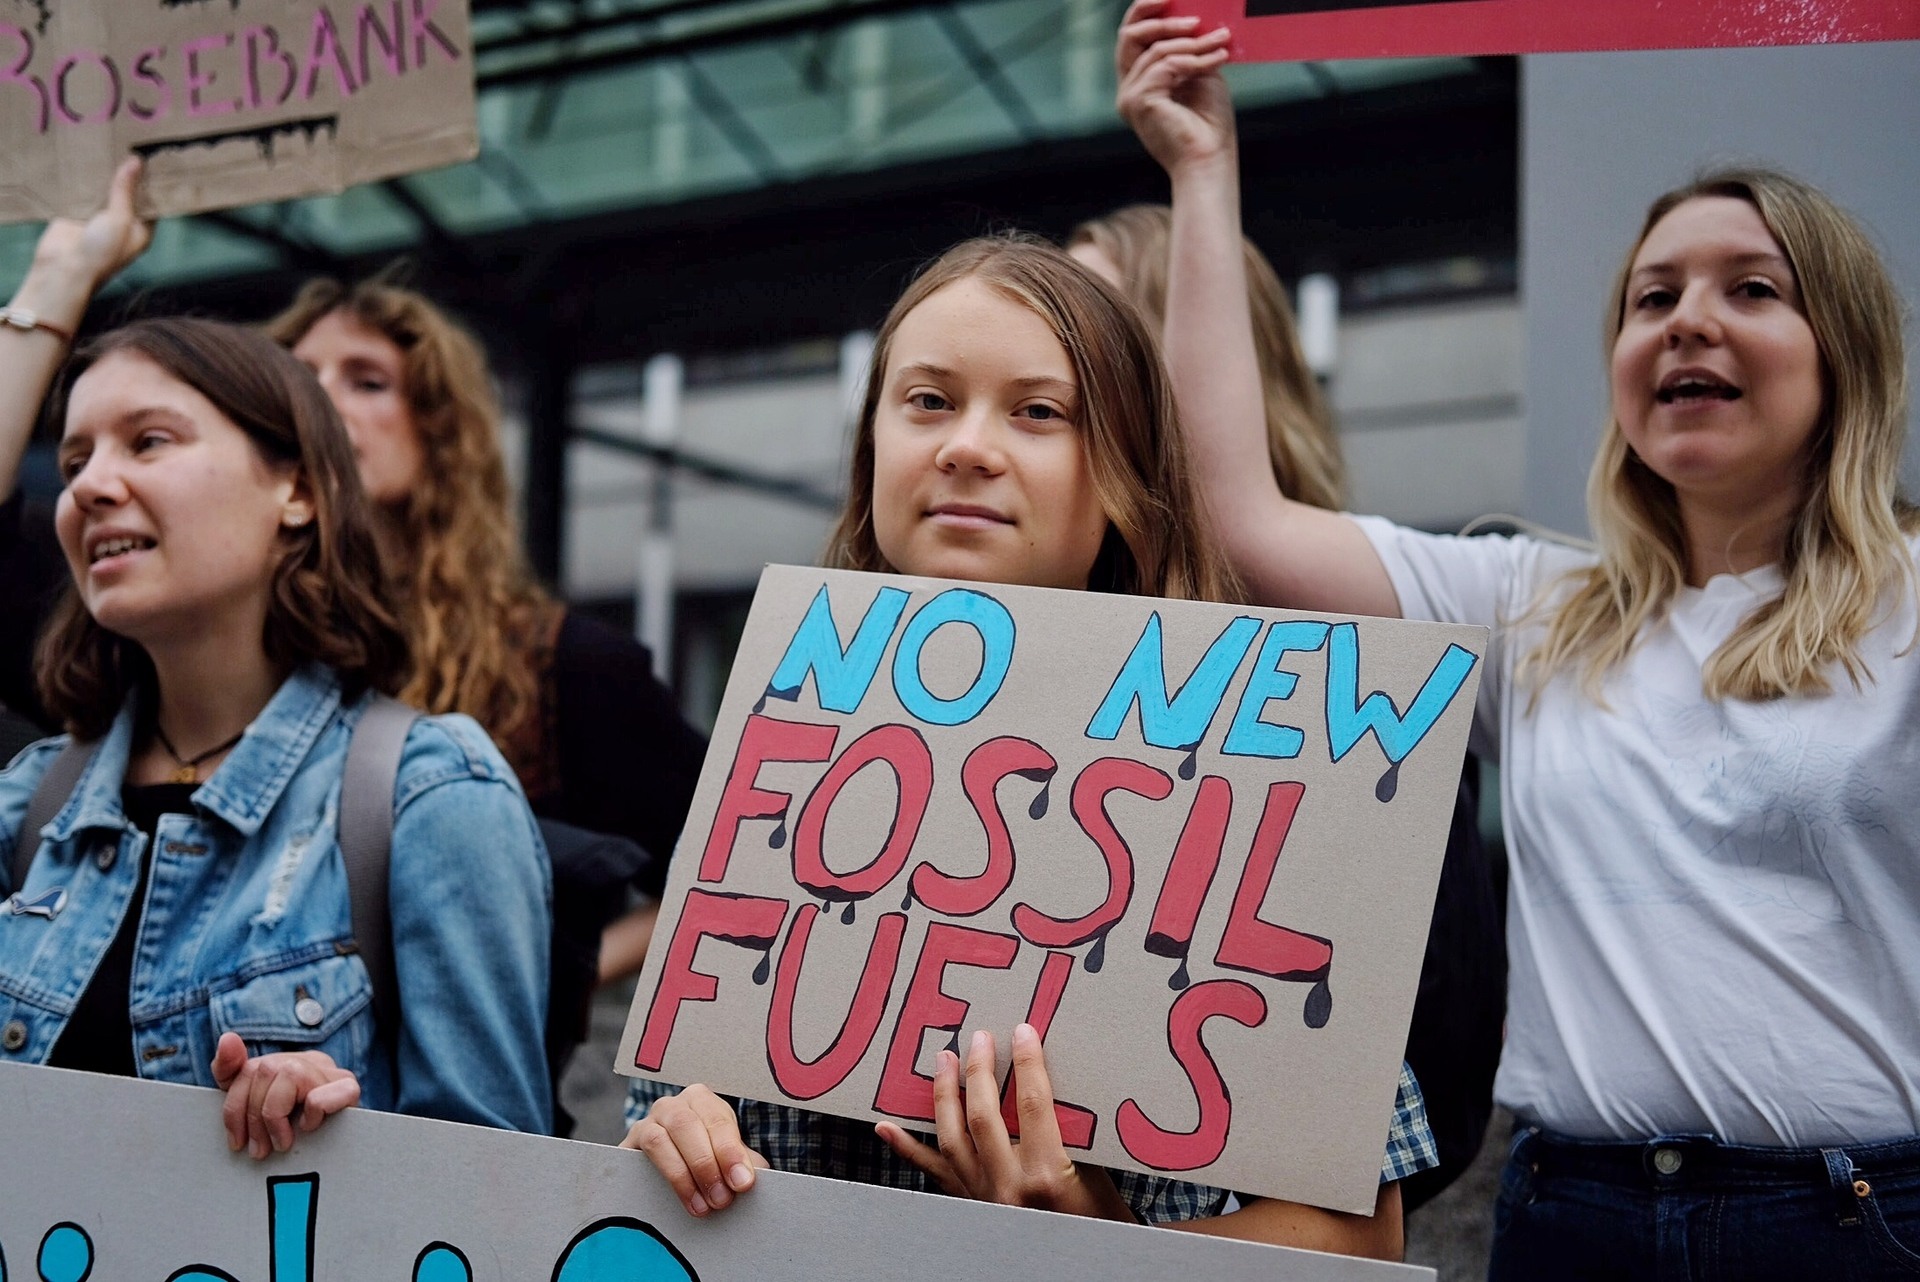 Greta Thunberg joins protesters in London against the Rosebank oil field.